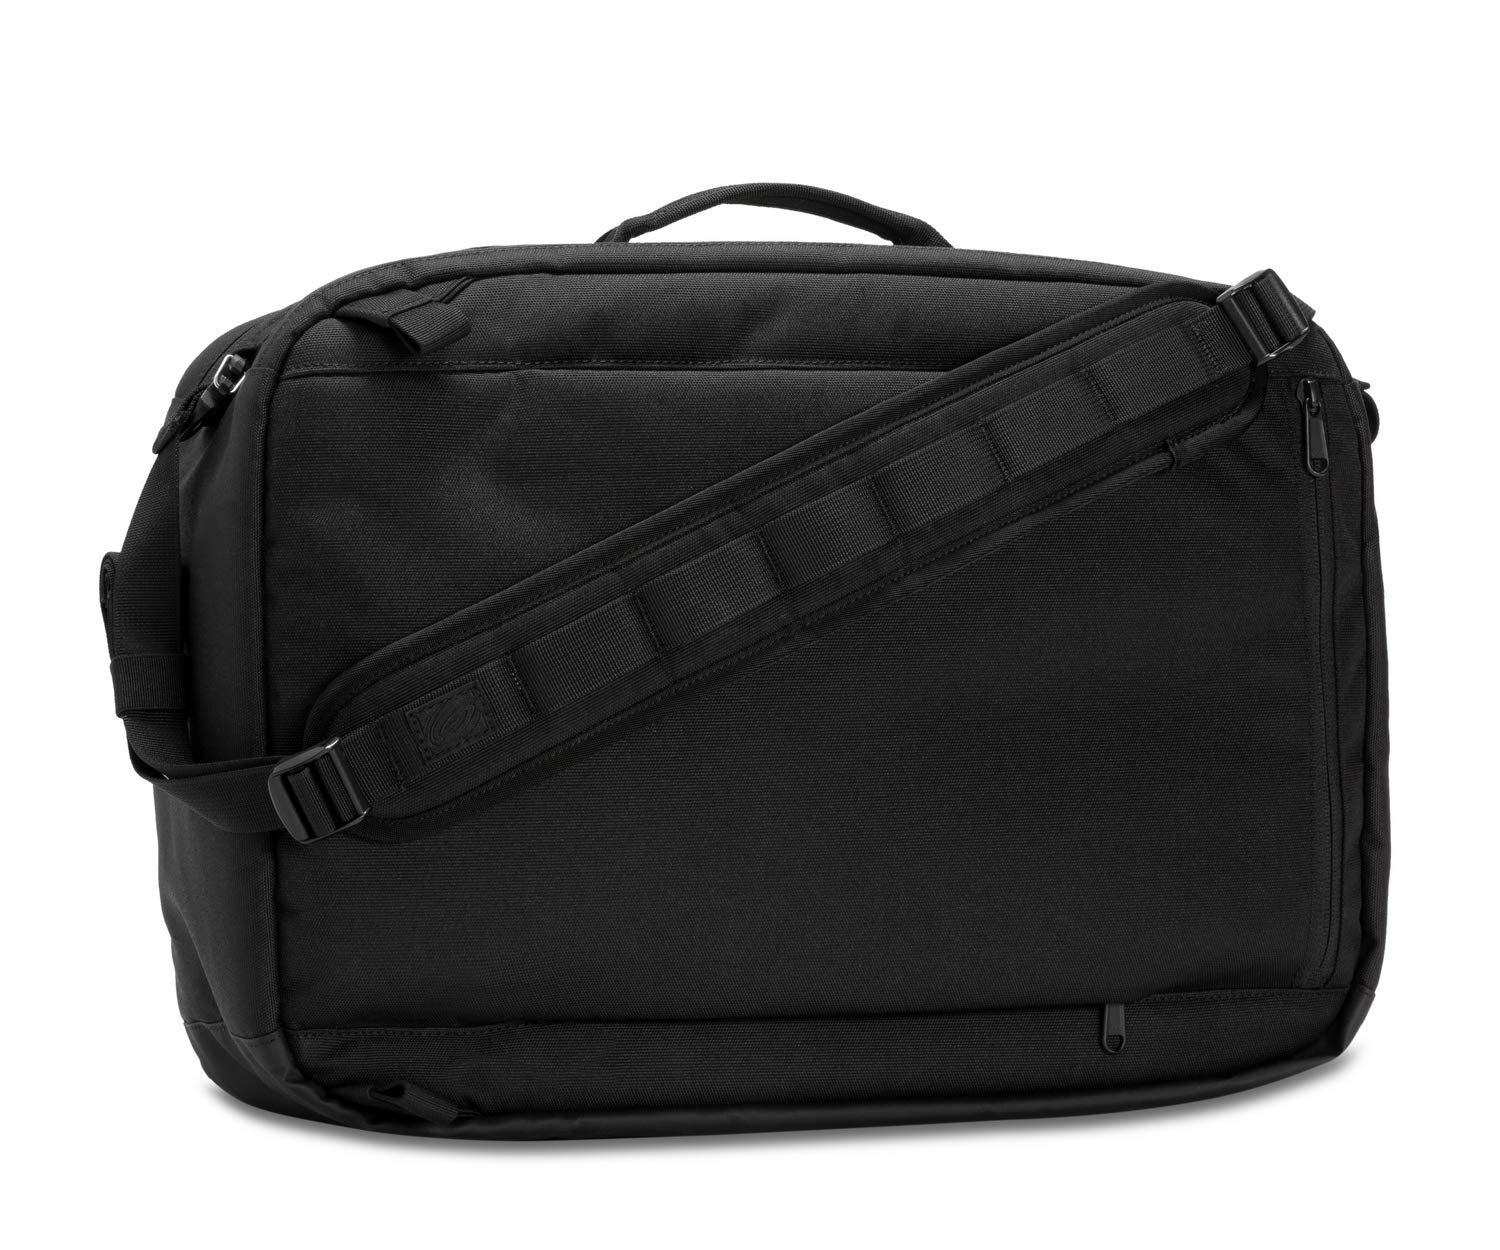 Timbuk2 Scheme Convertible Briefcase Backpack, Jet Black, Medium